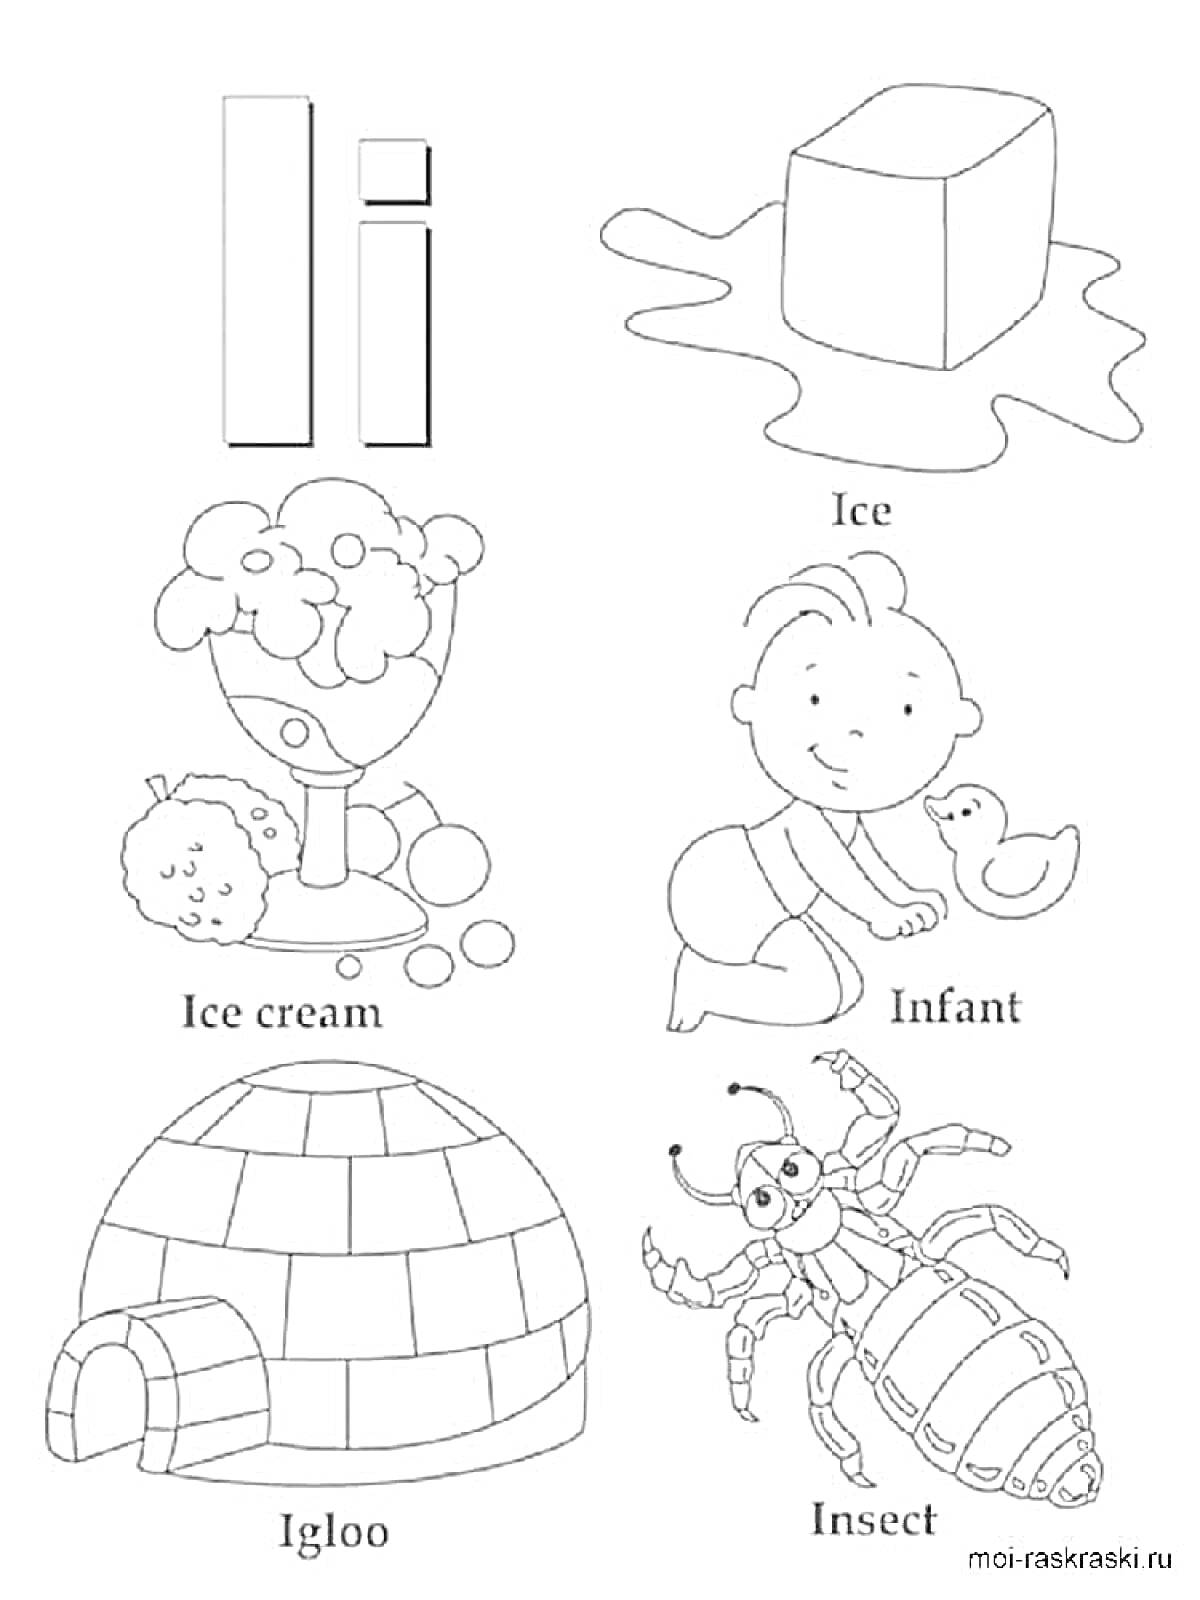 На раскраске изображено: Буква I, Лед, Мороженое, Младенец, Иглу, Насекомое, Английский алфавит